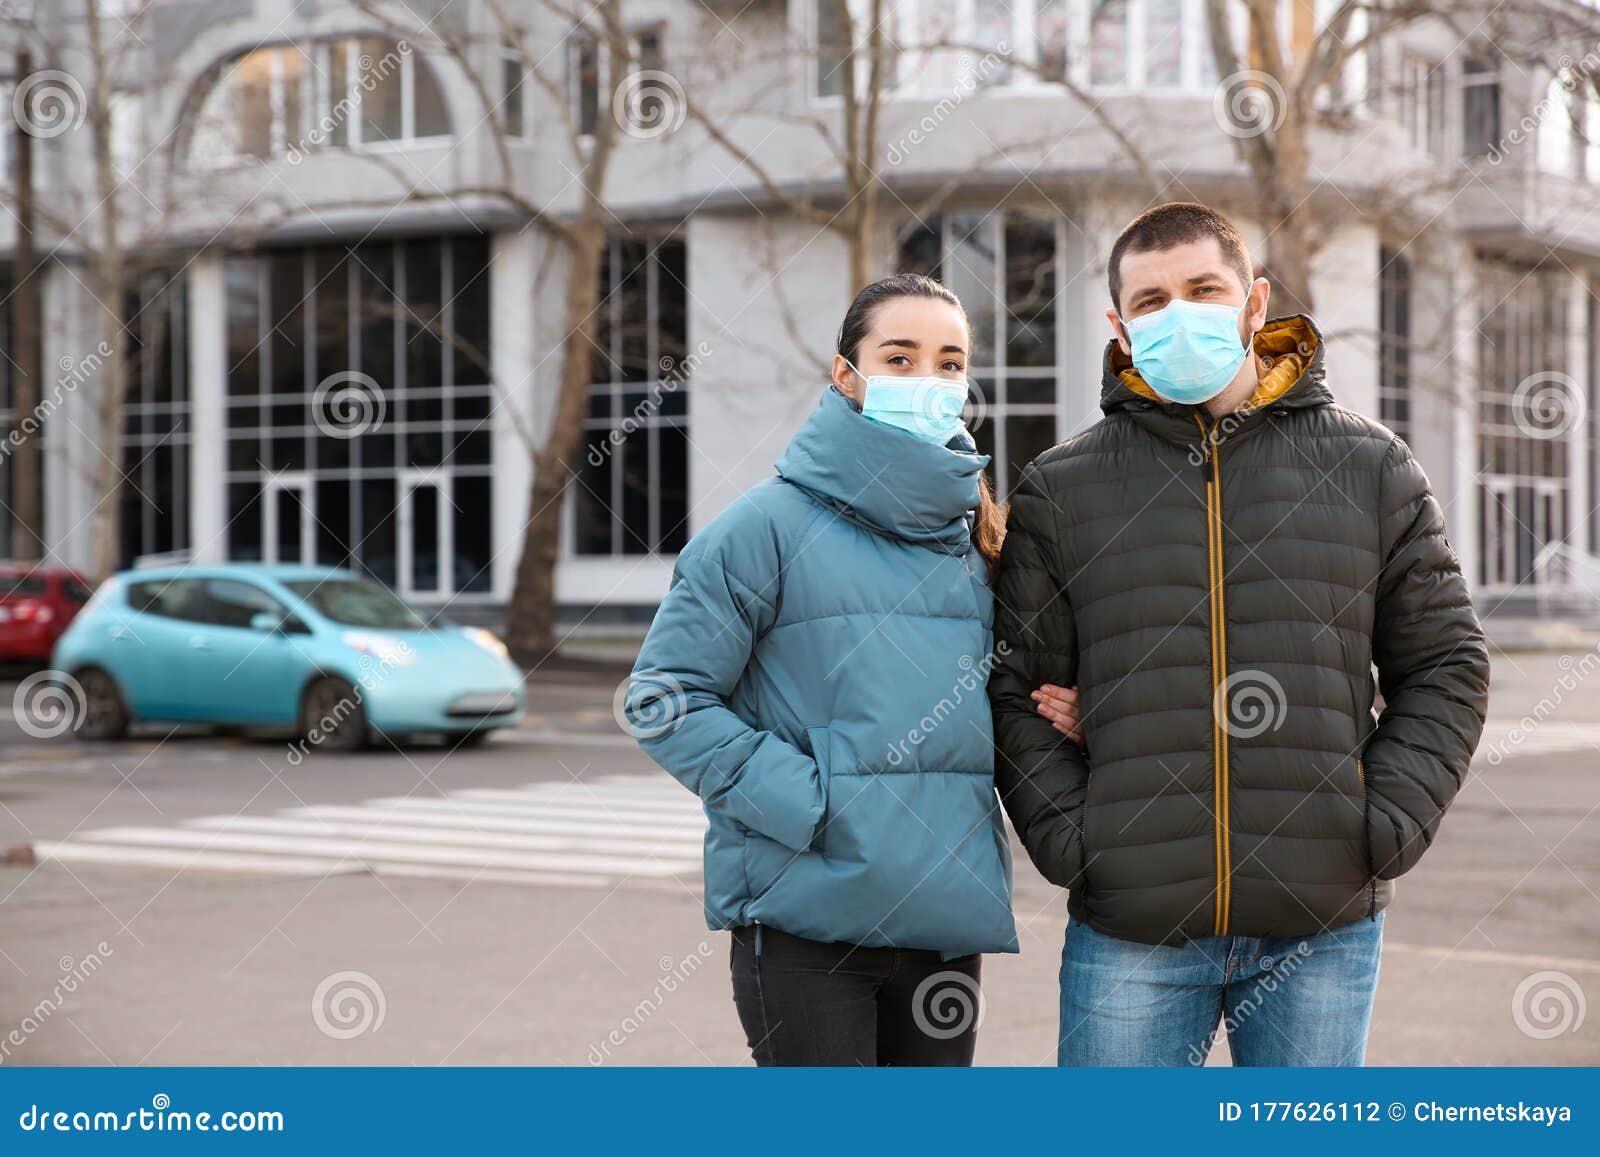 couple wearing disposable masks. dangerous virus